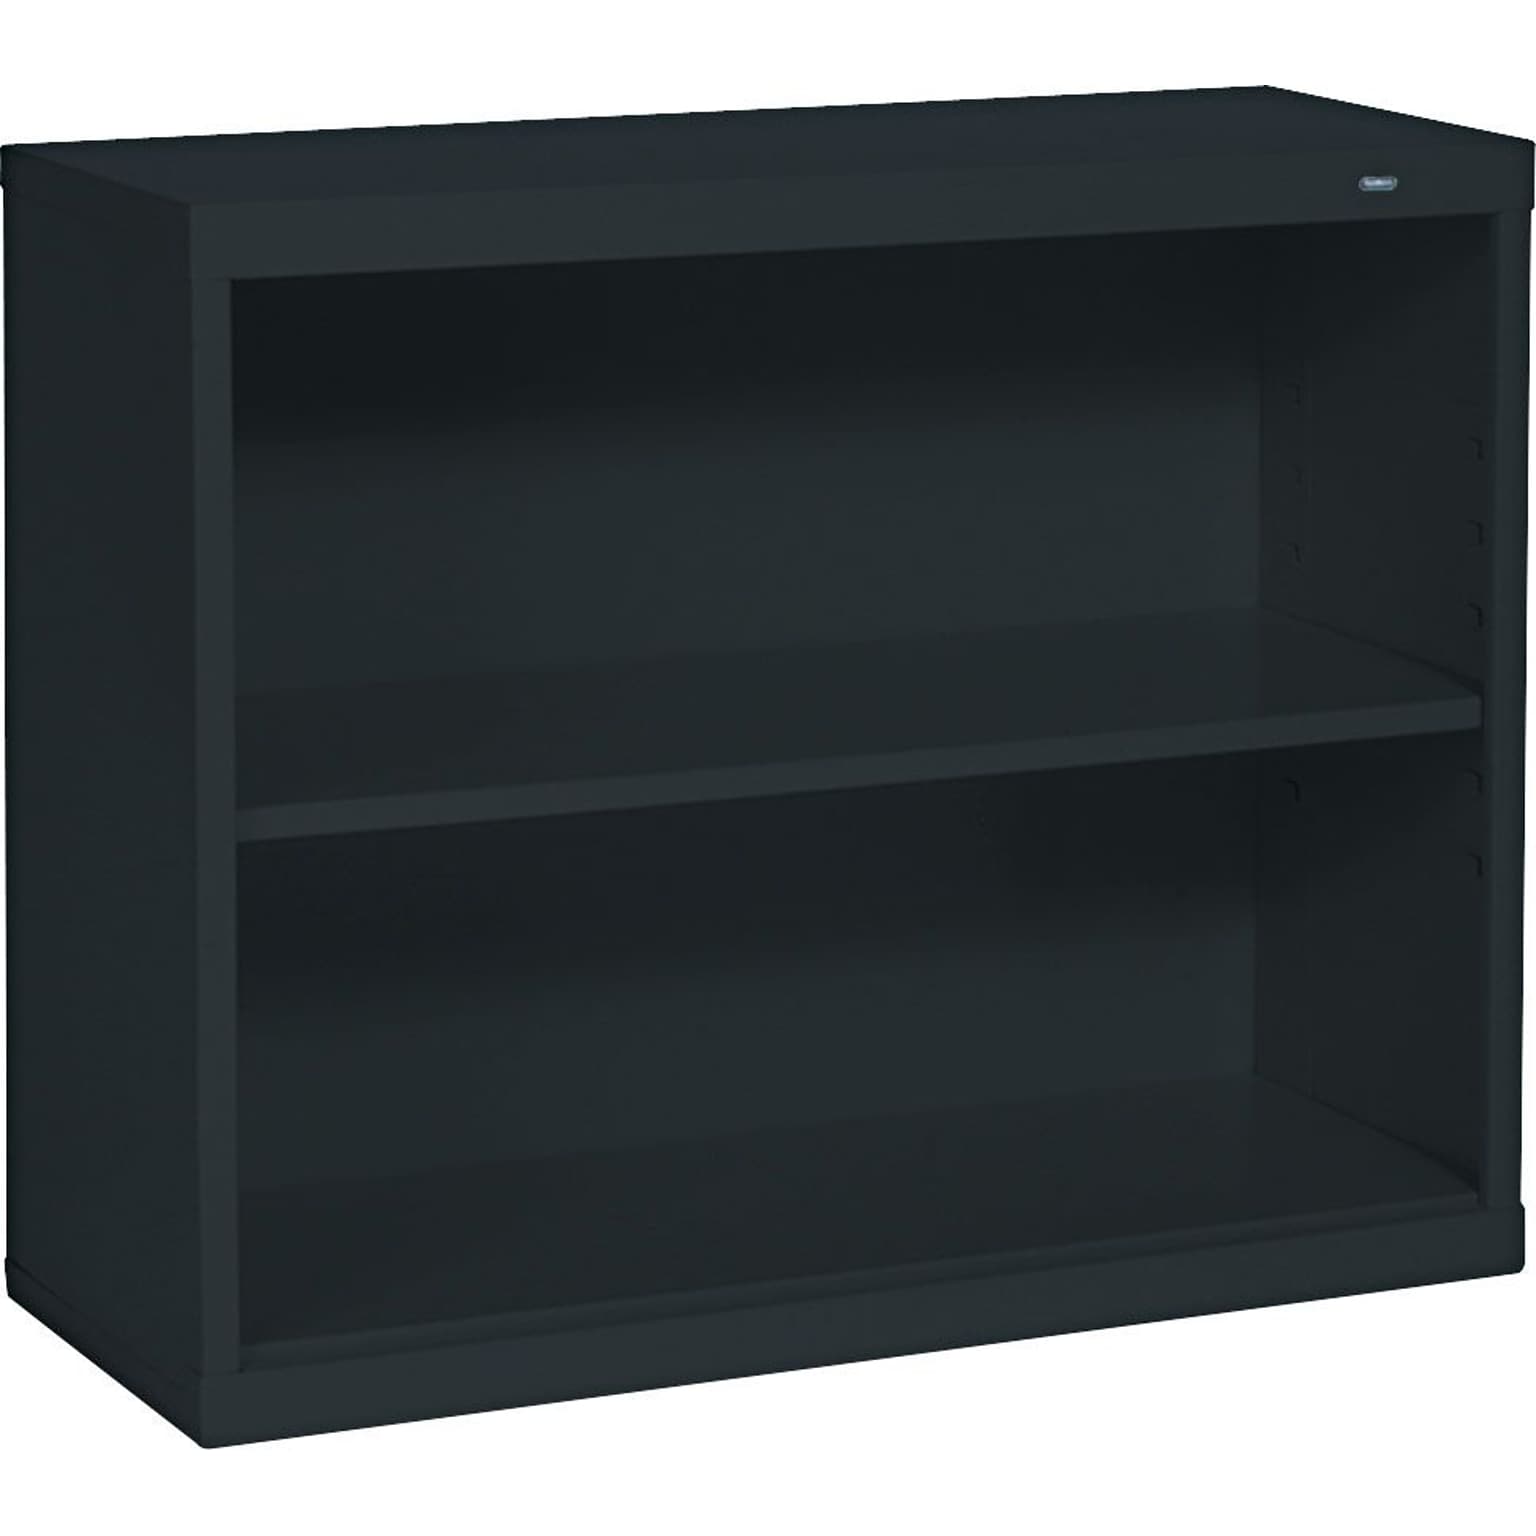 Tennsco® Metal Bookcases in Black, 28